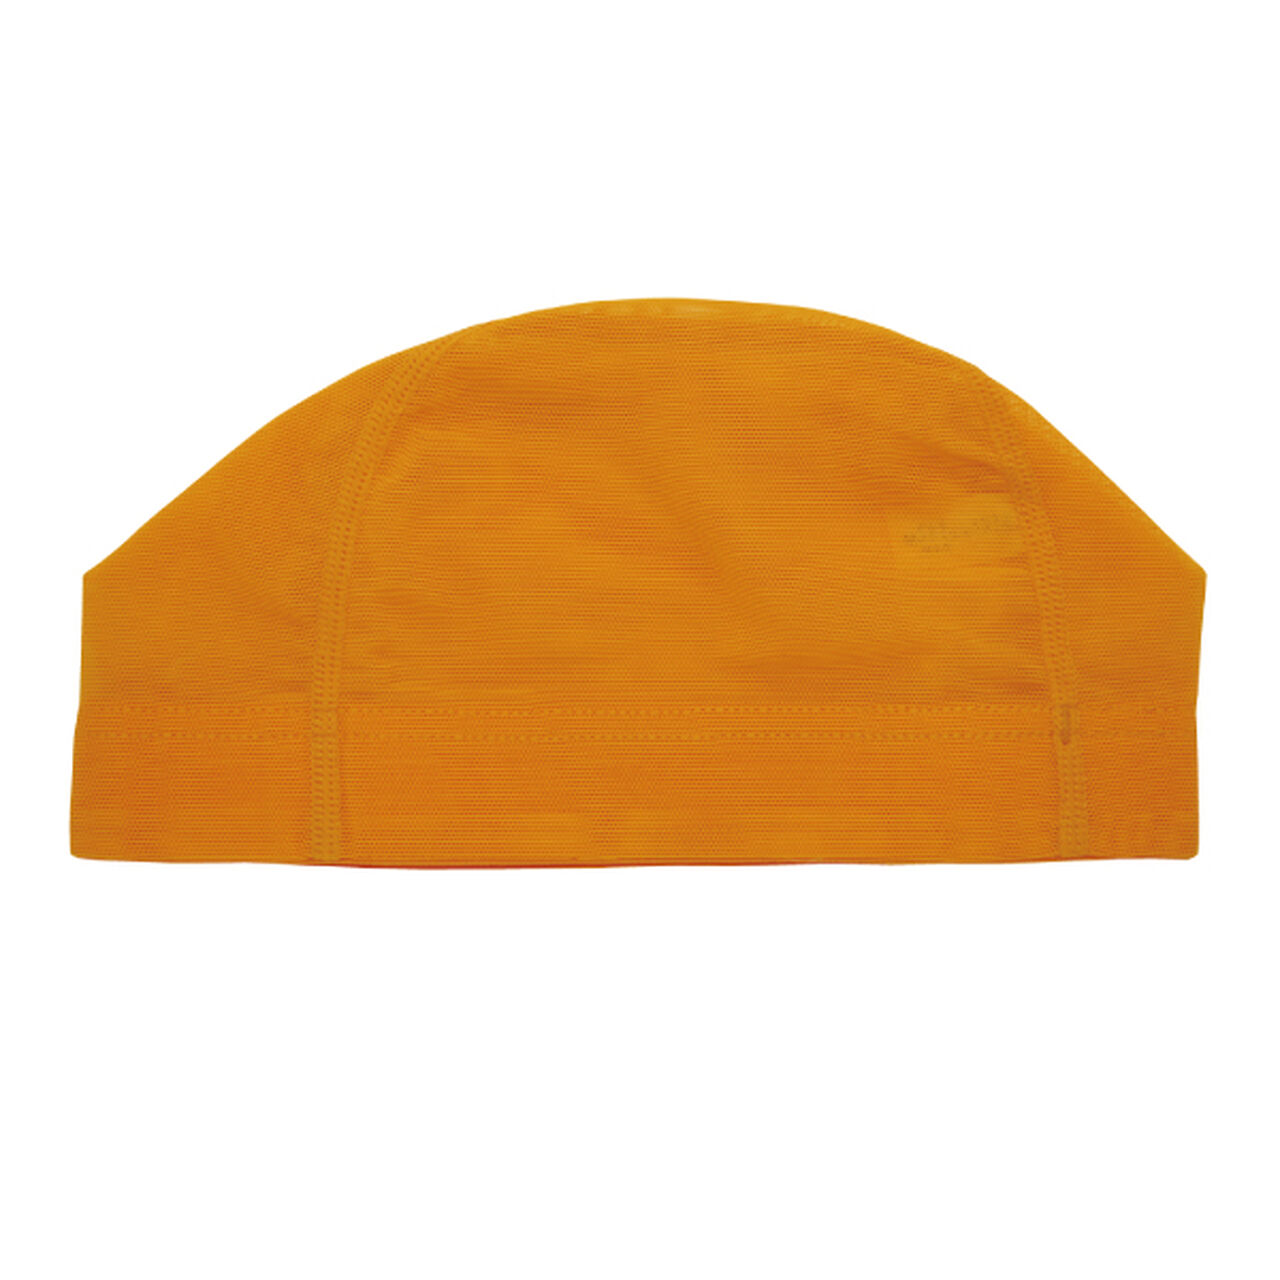 SA-61 L Orange mesh swim cap L size,Opt8, large image number 0